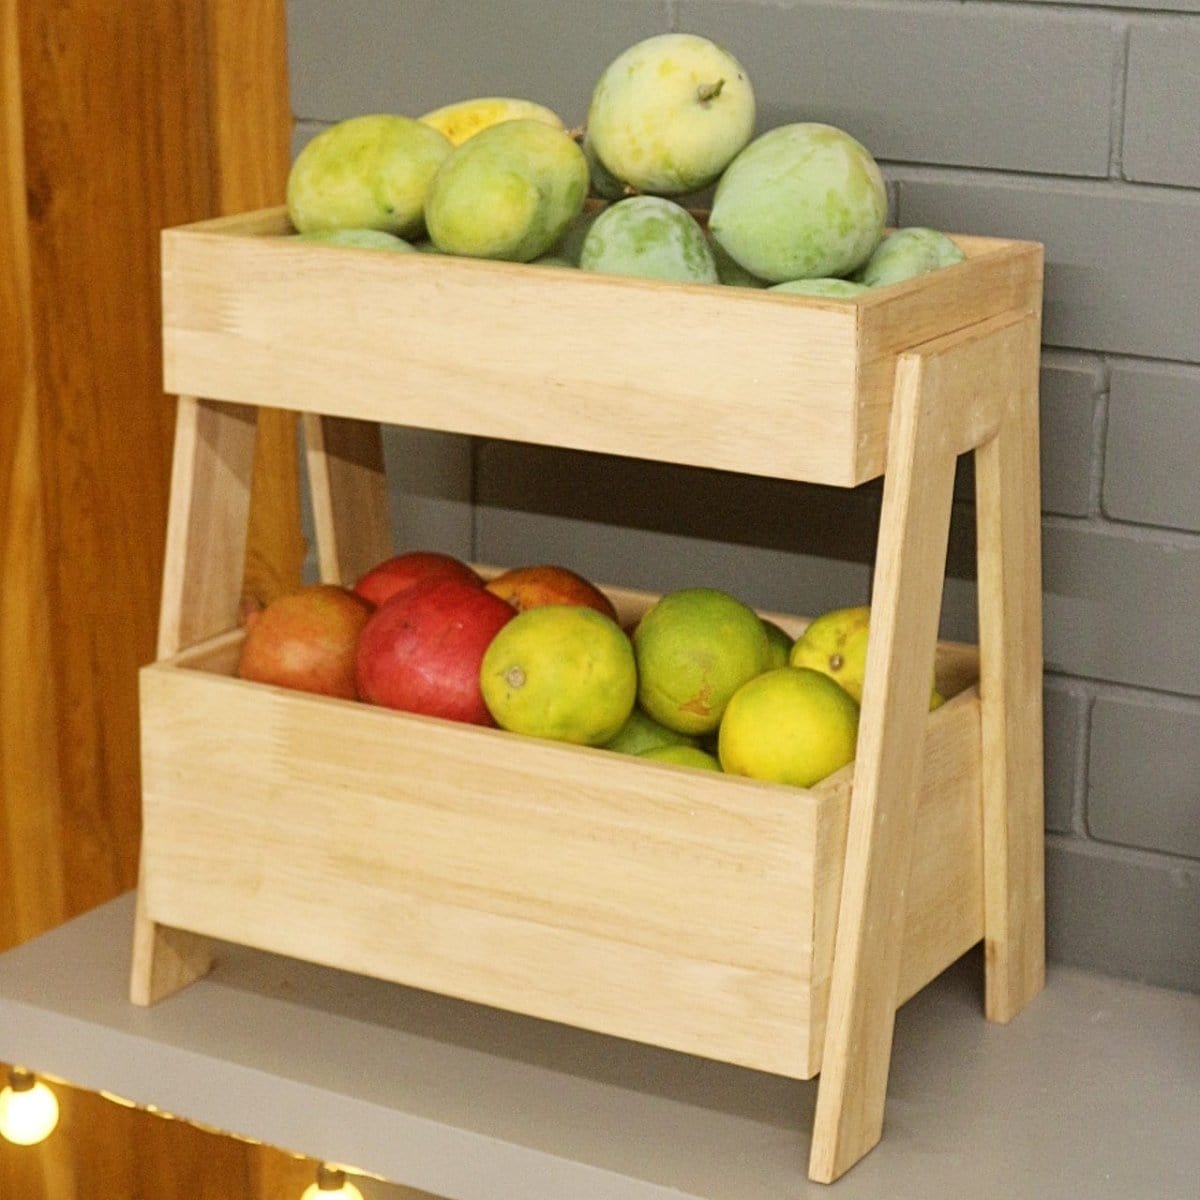 Barish Veg & Fruit Basket 2 Tier Rubberwood BH0138RW Best Home Decor Handcrafted